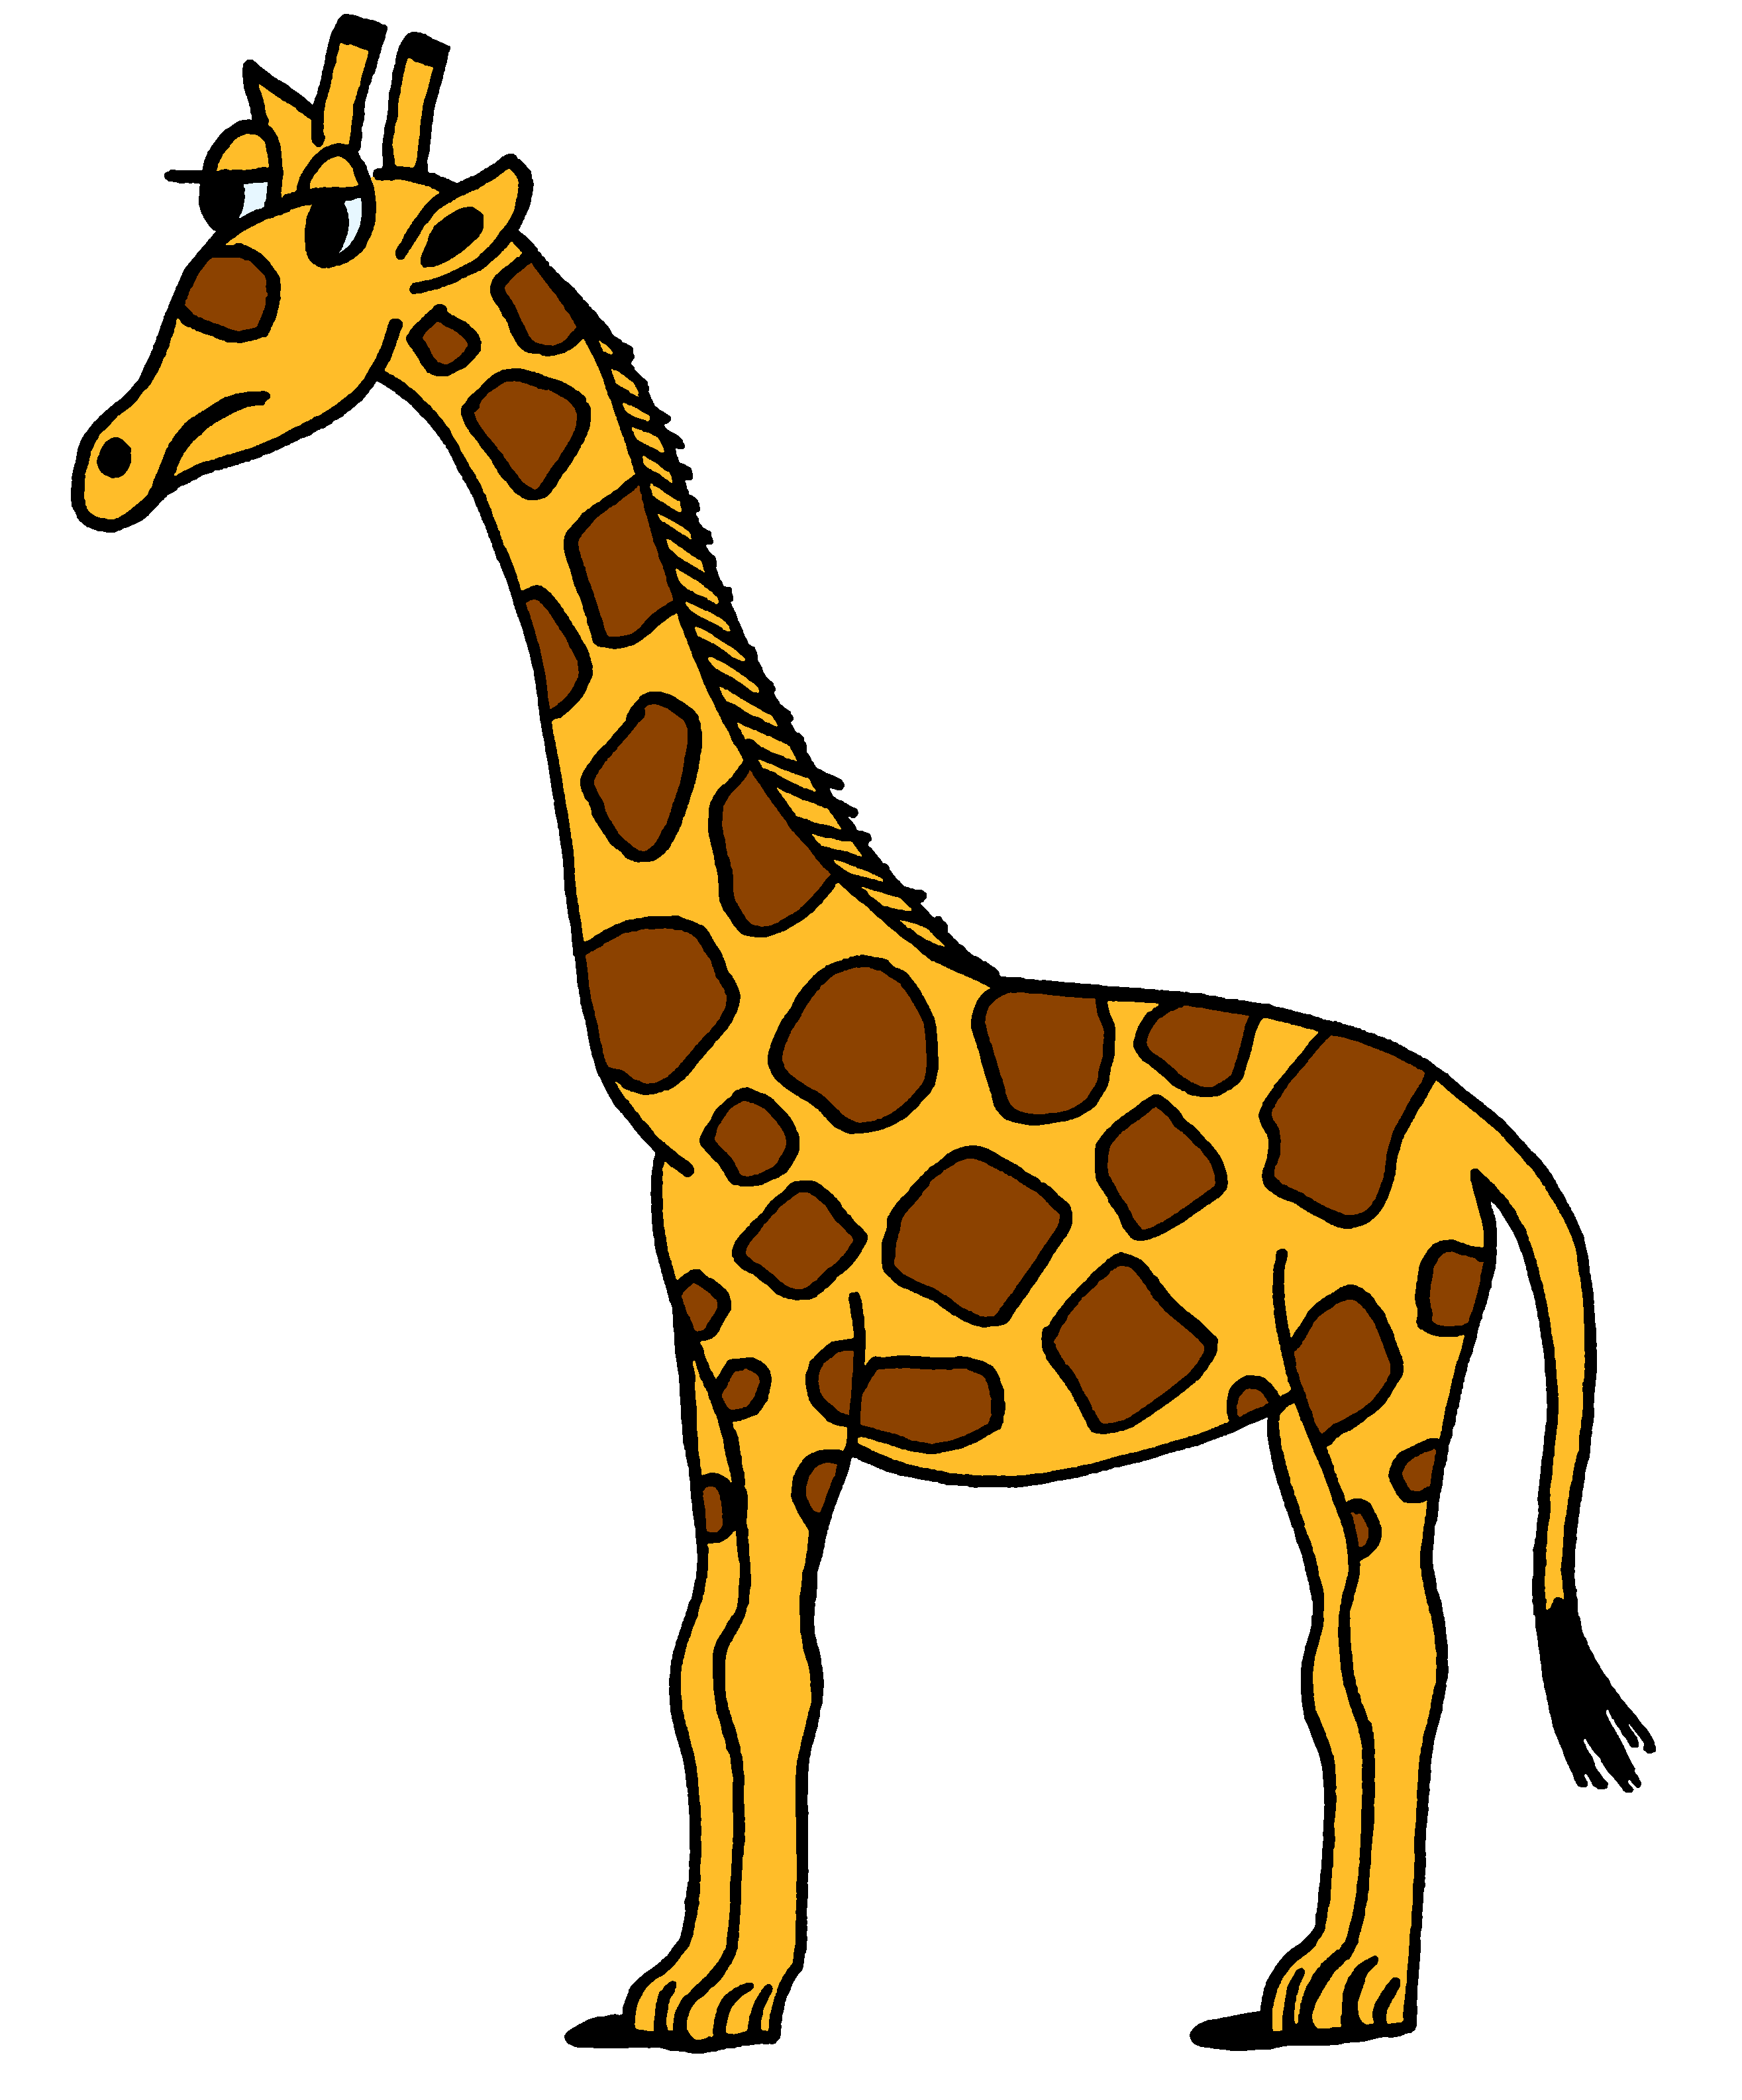 Free cartoon giraffe clipart